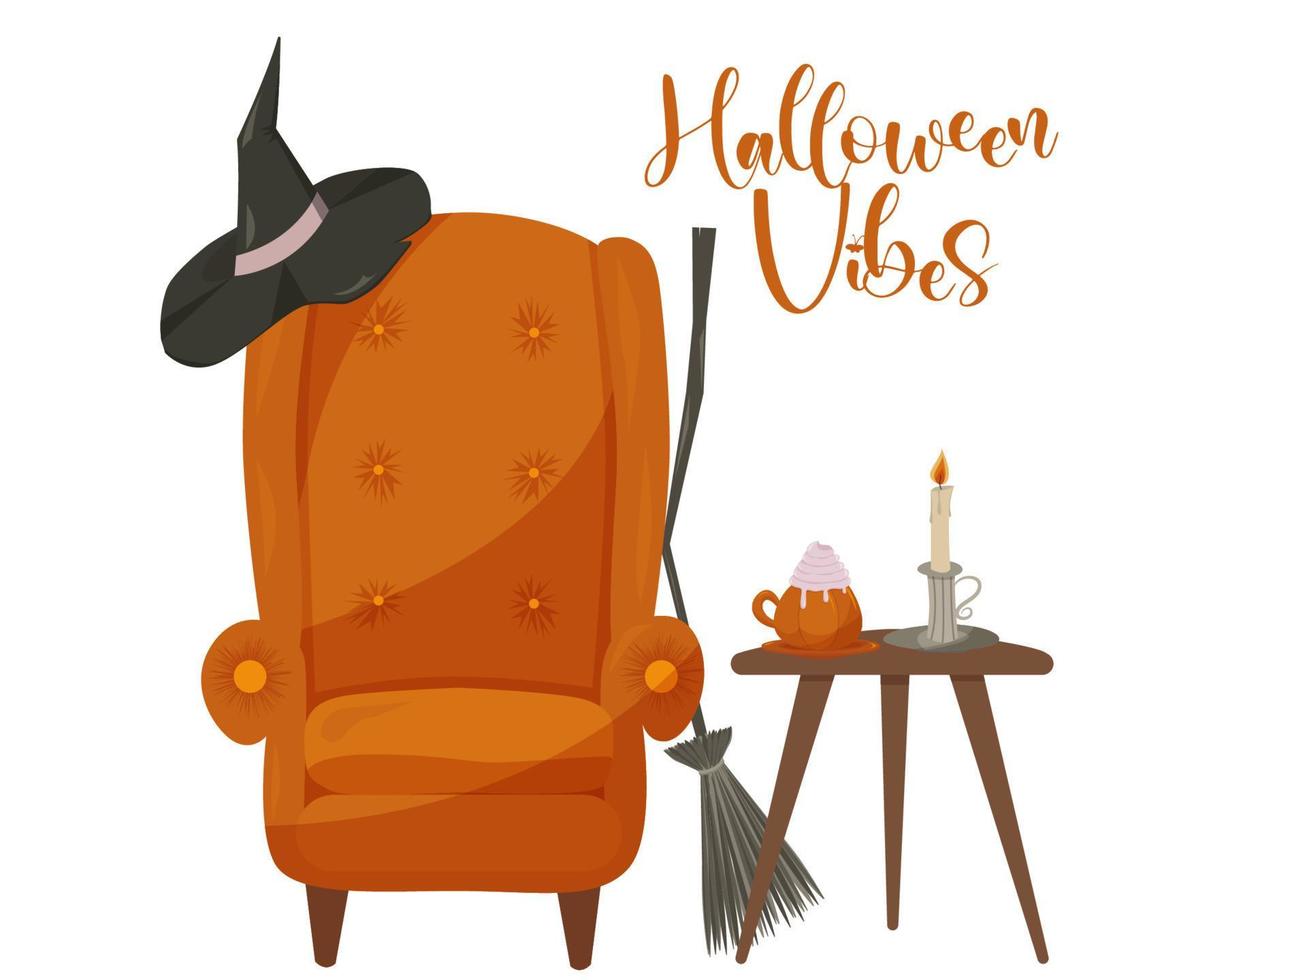 silla de bruja hygge naranja con mesa de café, escoba, café con leche y velas, vibraciones de halloween. ilustración vectorial vector